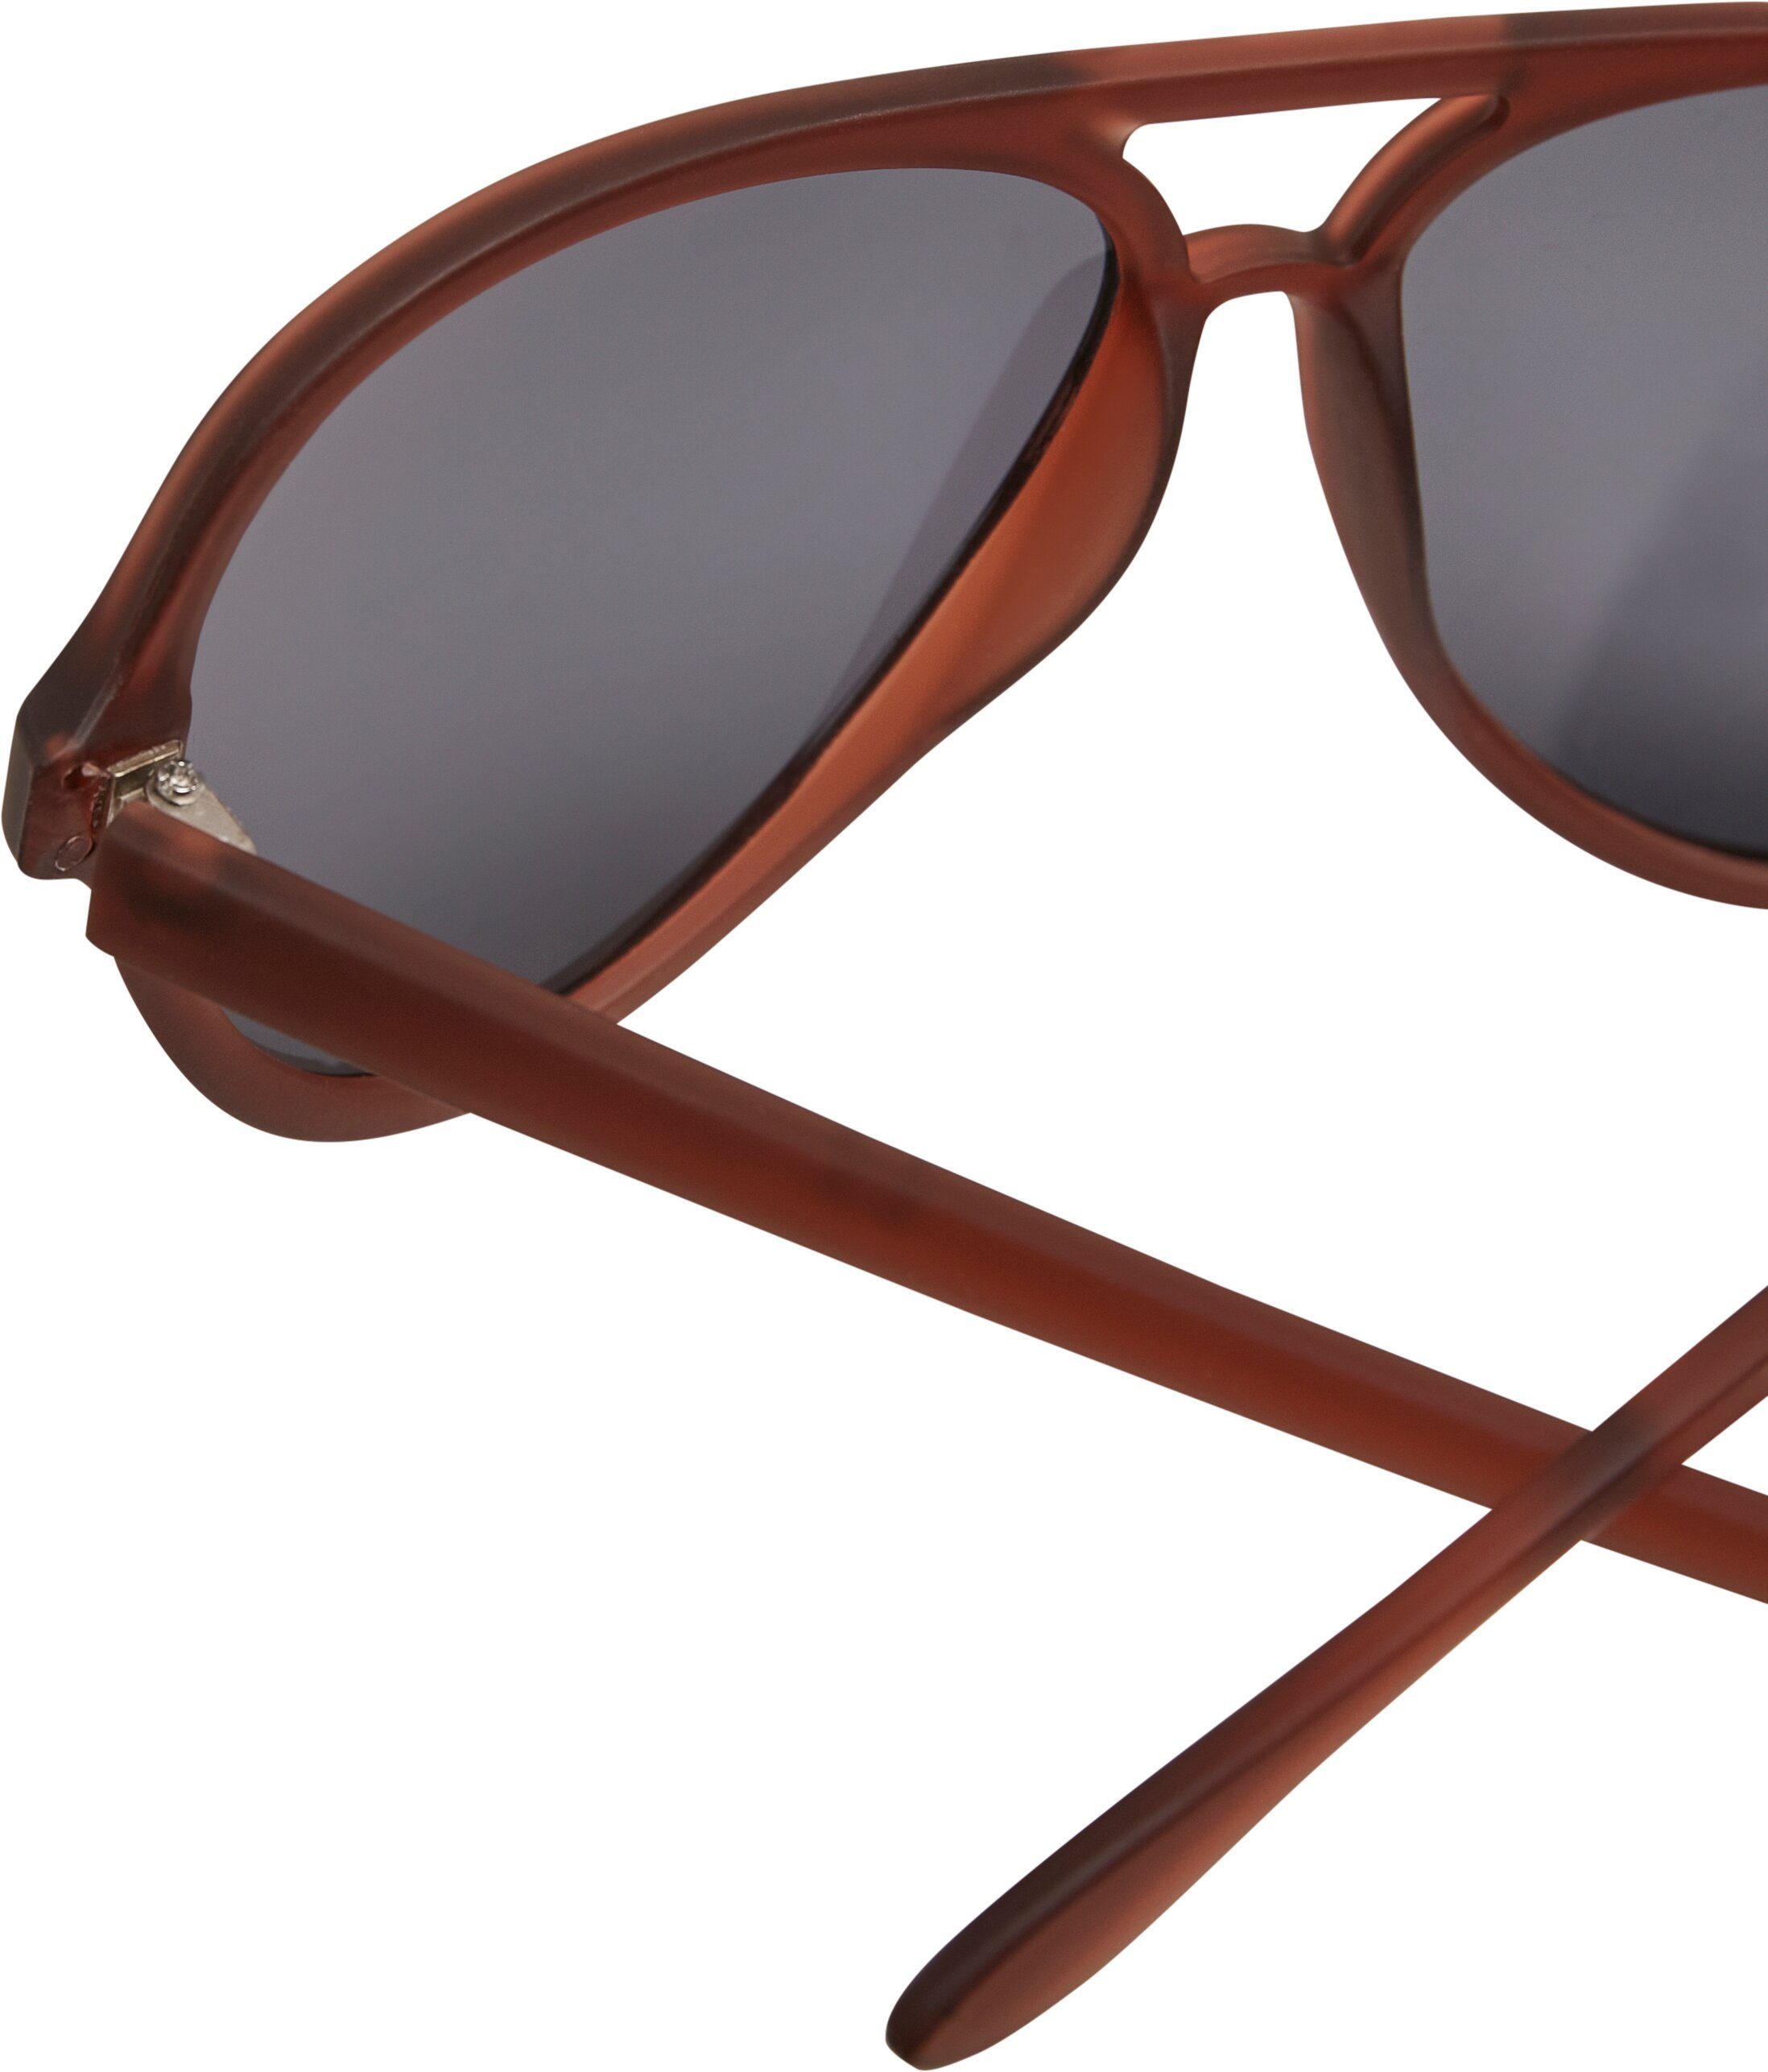 MSTRDS Sonnenbrille Accessoires Sunglasses brown March